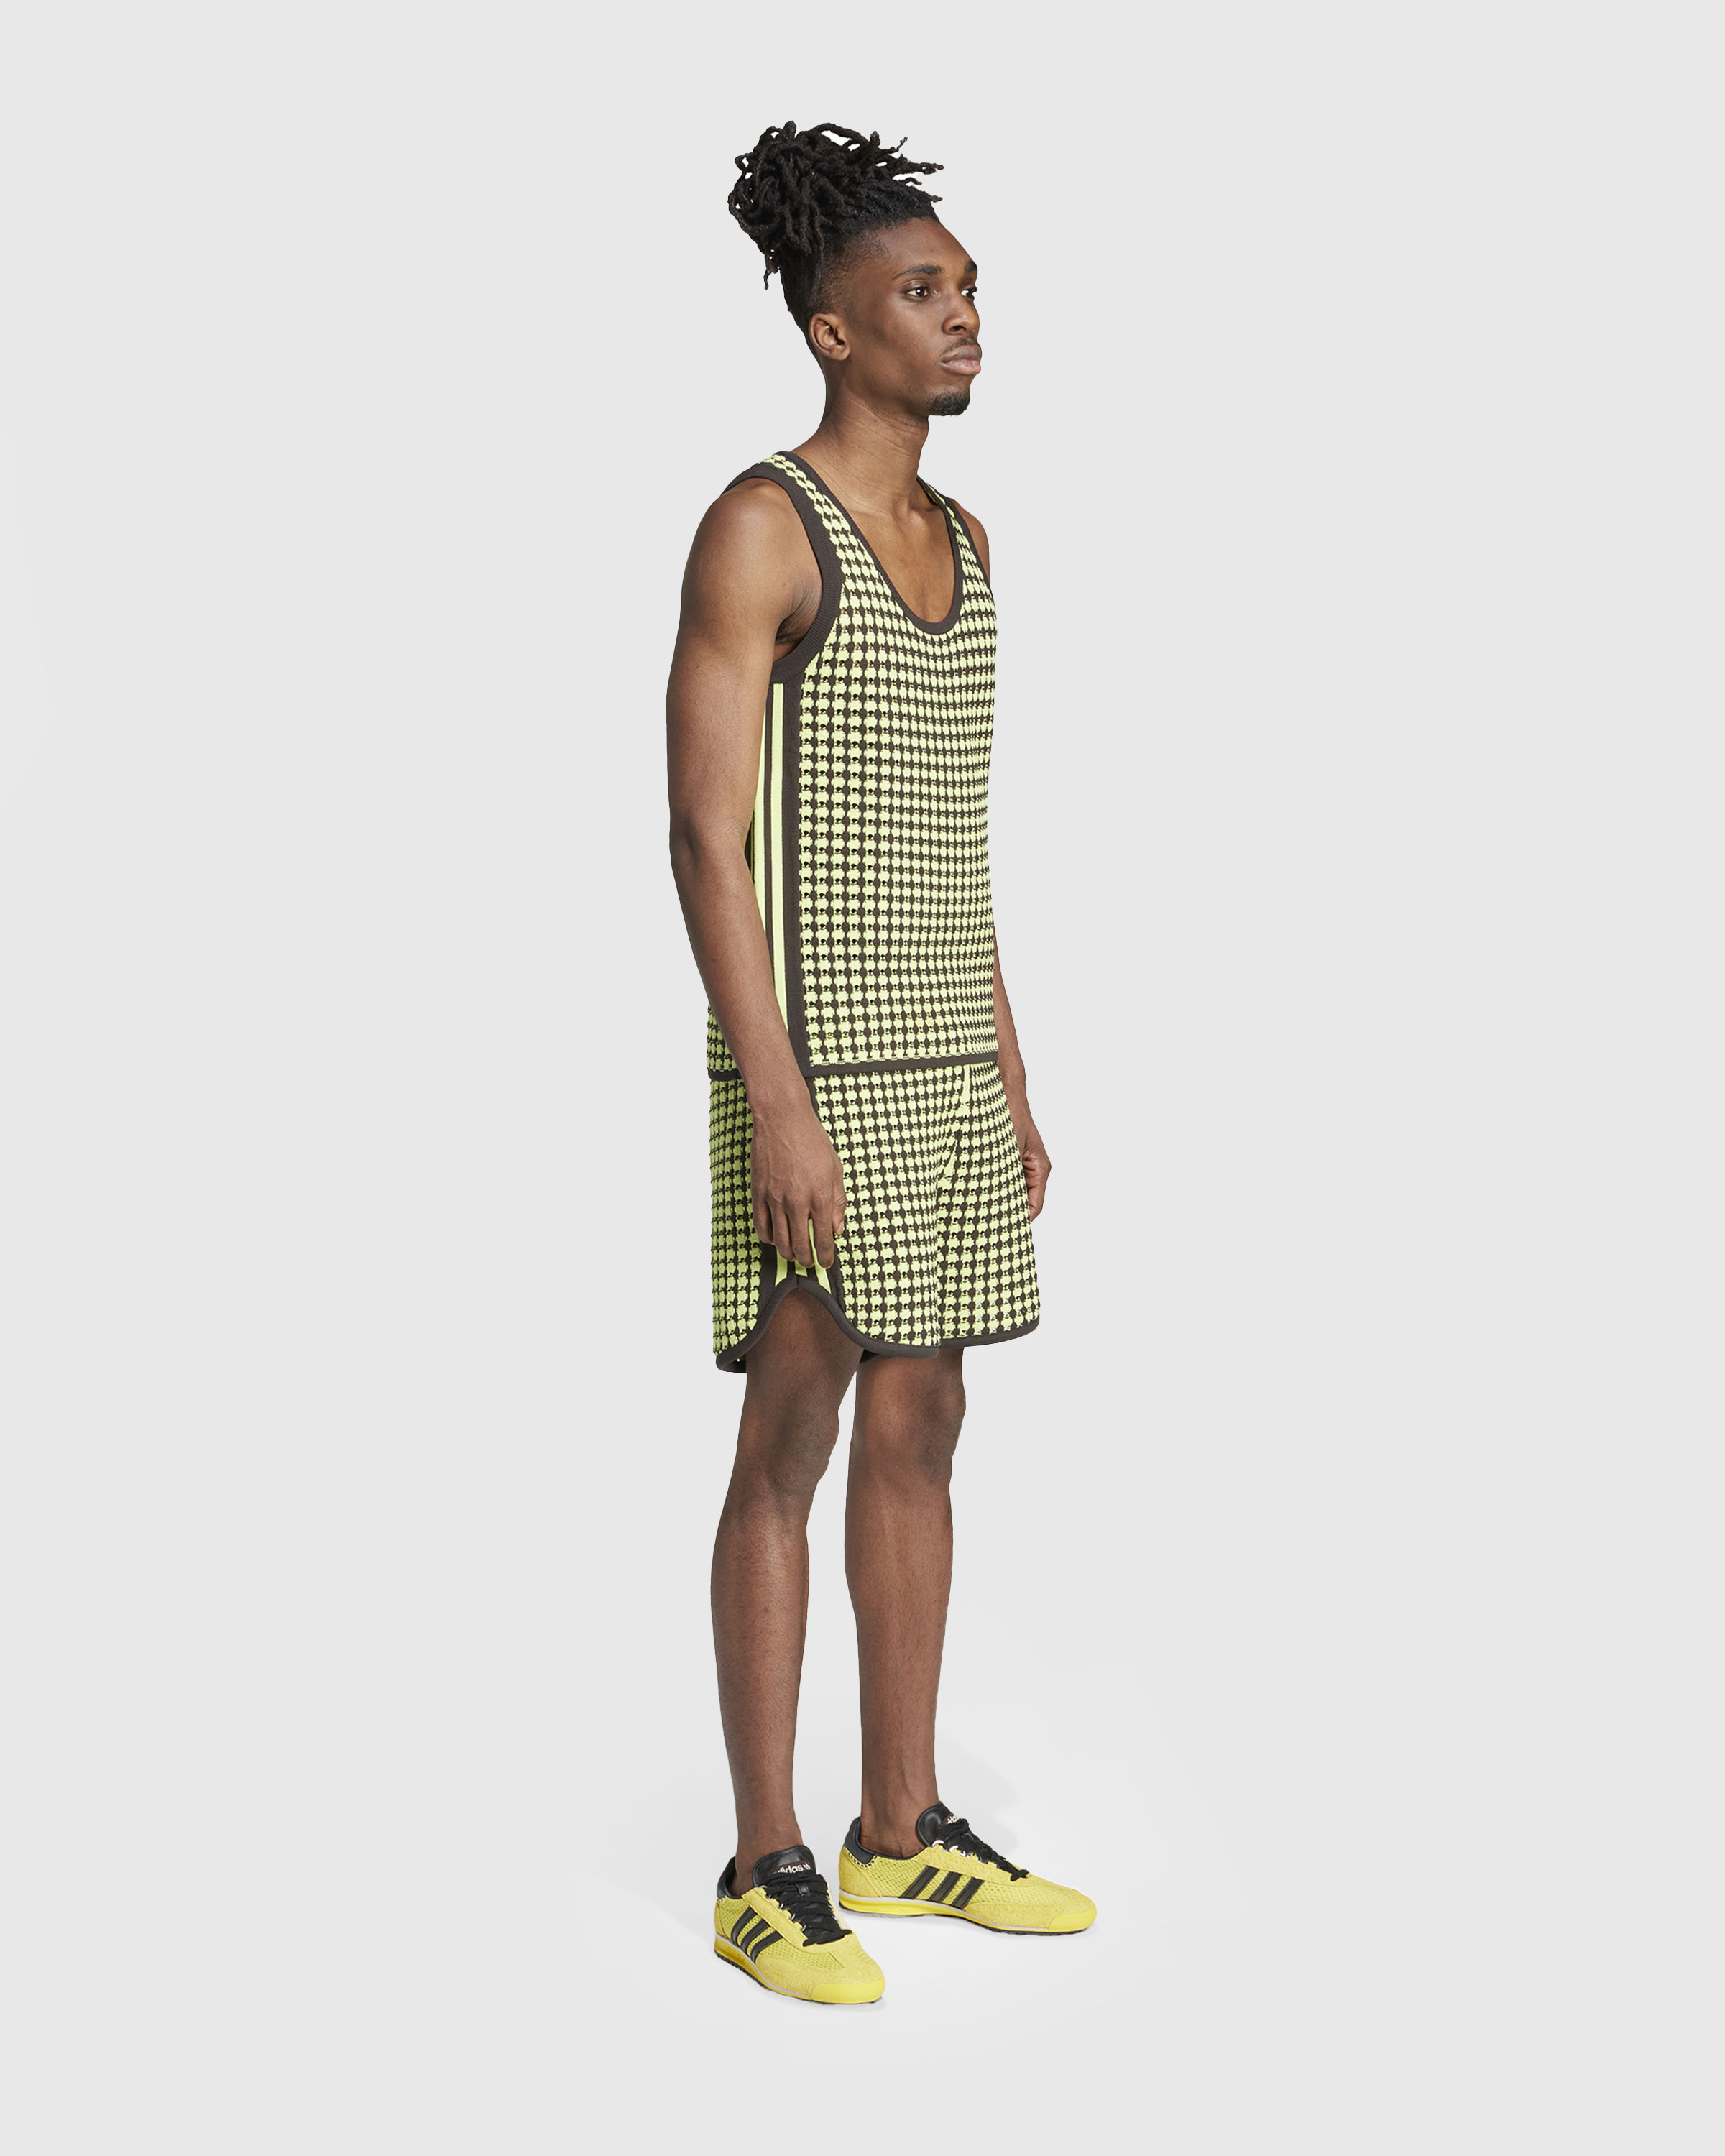 Adidas x Wales Bonner – Knit Shorts Semi Frozen Yellow/Night Brown - Short Cuts - Yellow - Image 3